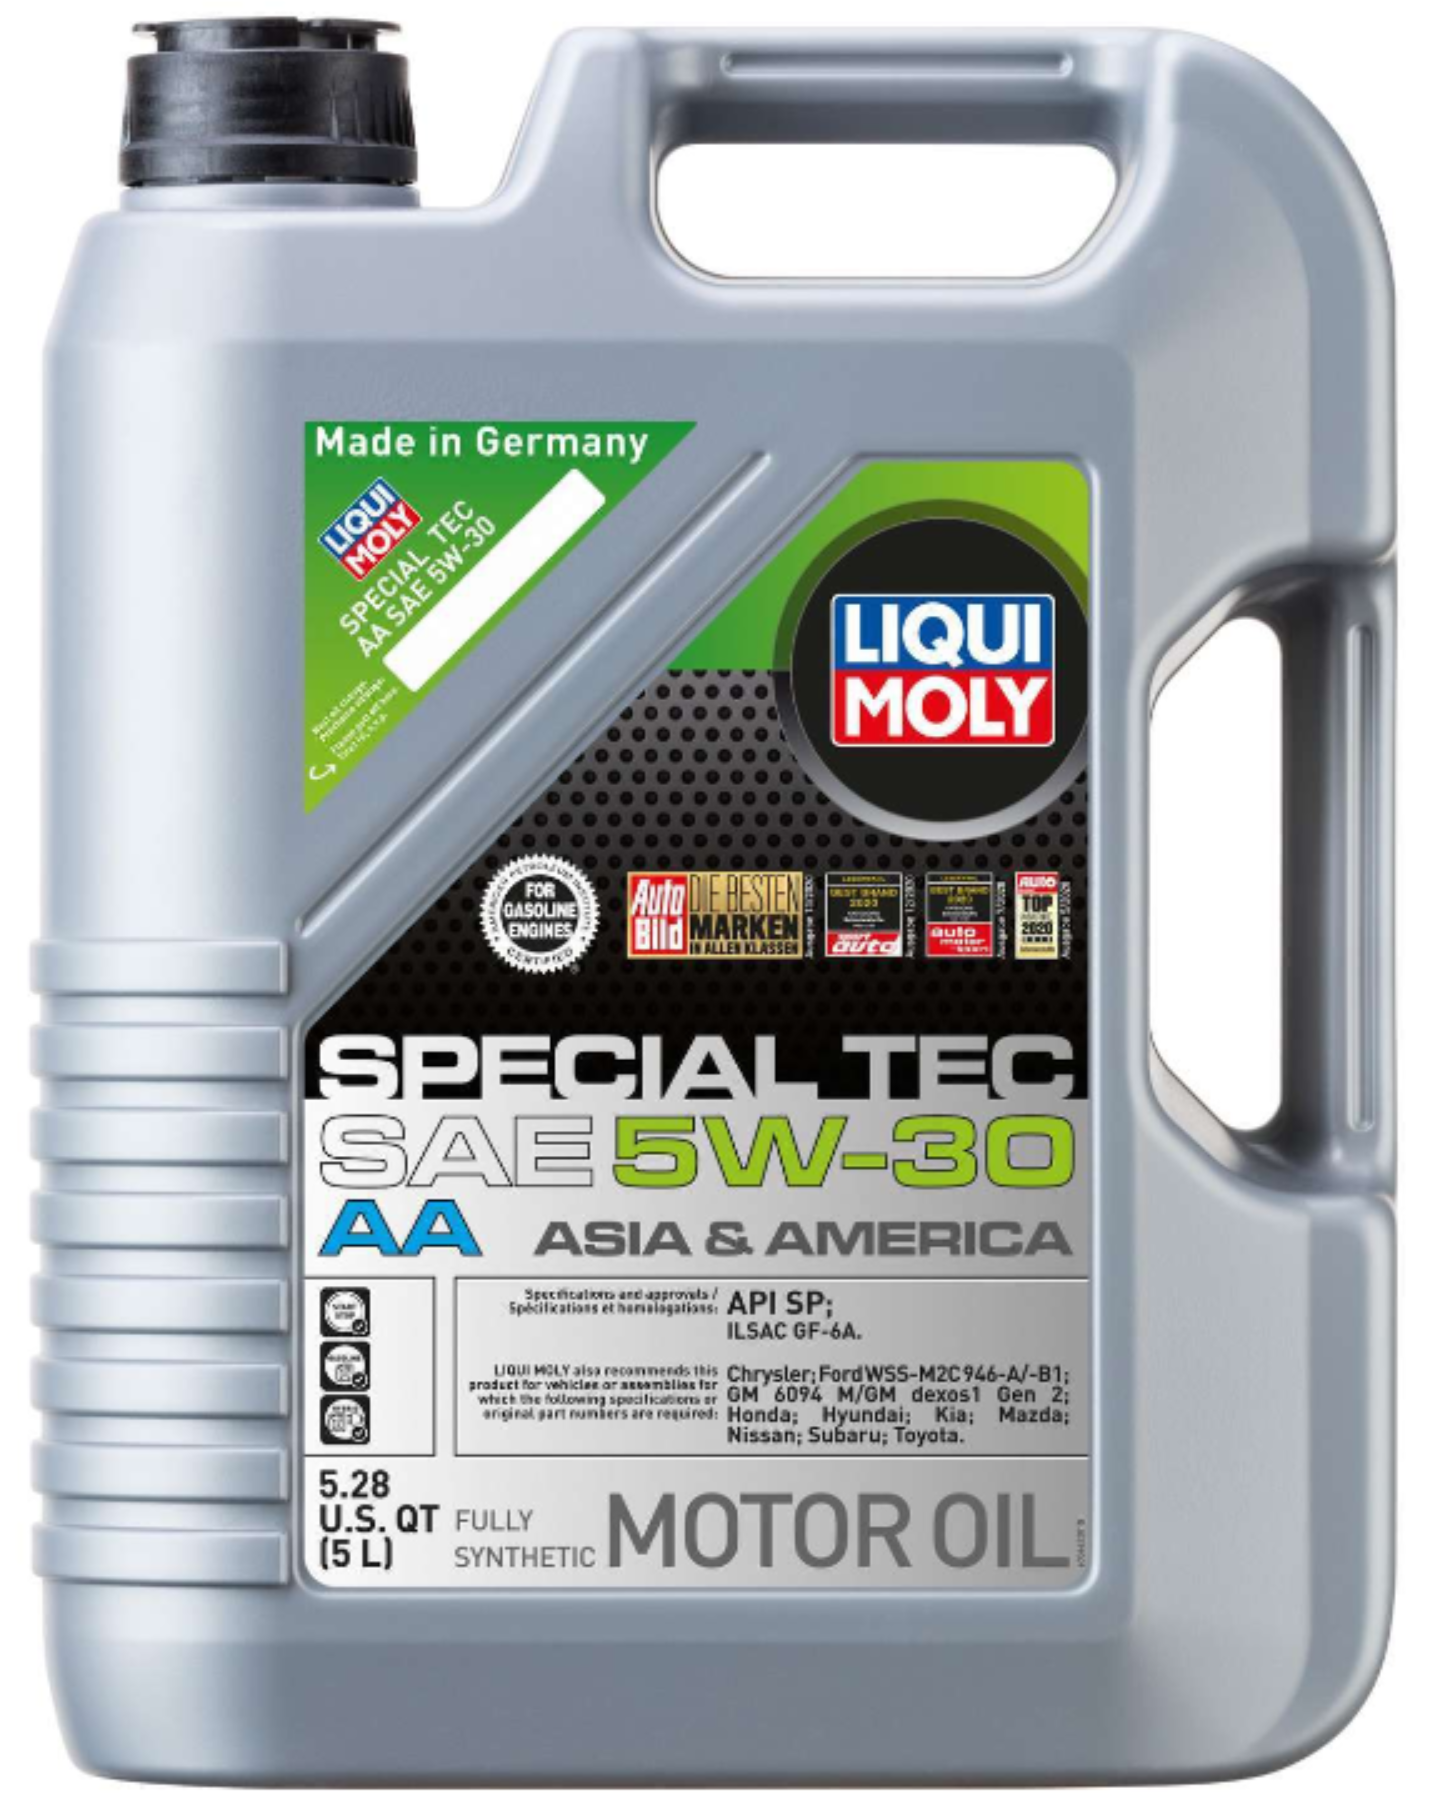 Special Tec AA 5W30 Engine Oil (5 Liter) - Liqui Moly 20138